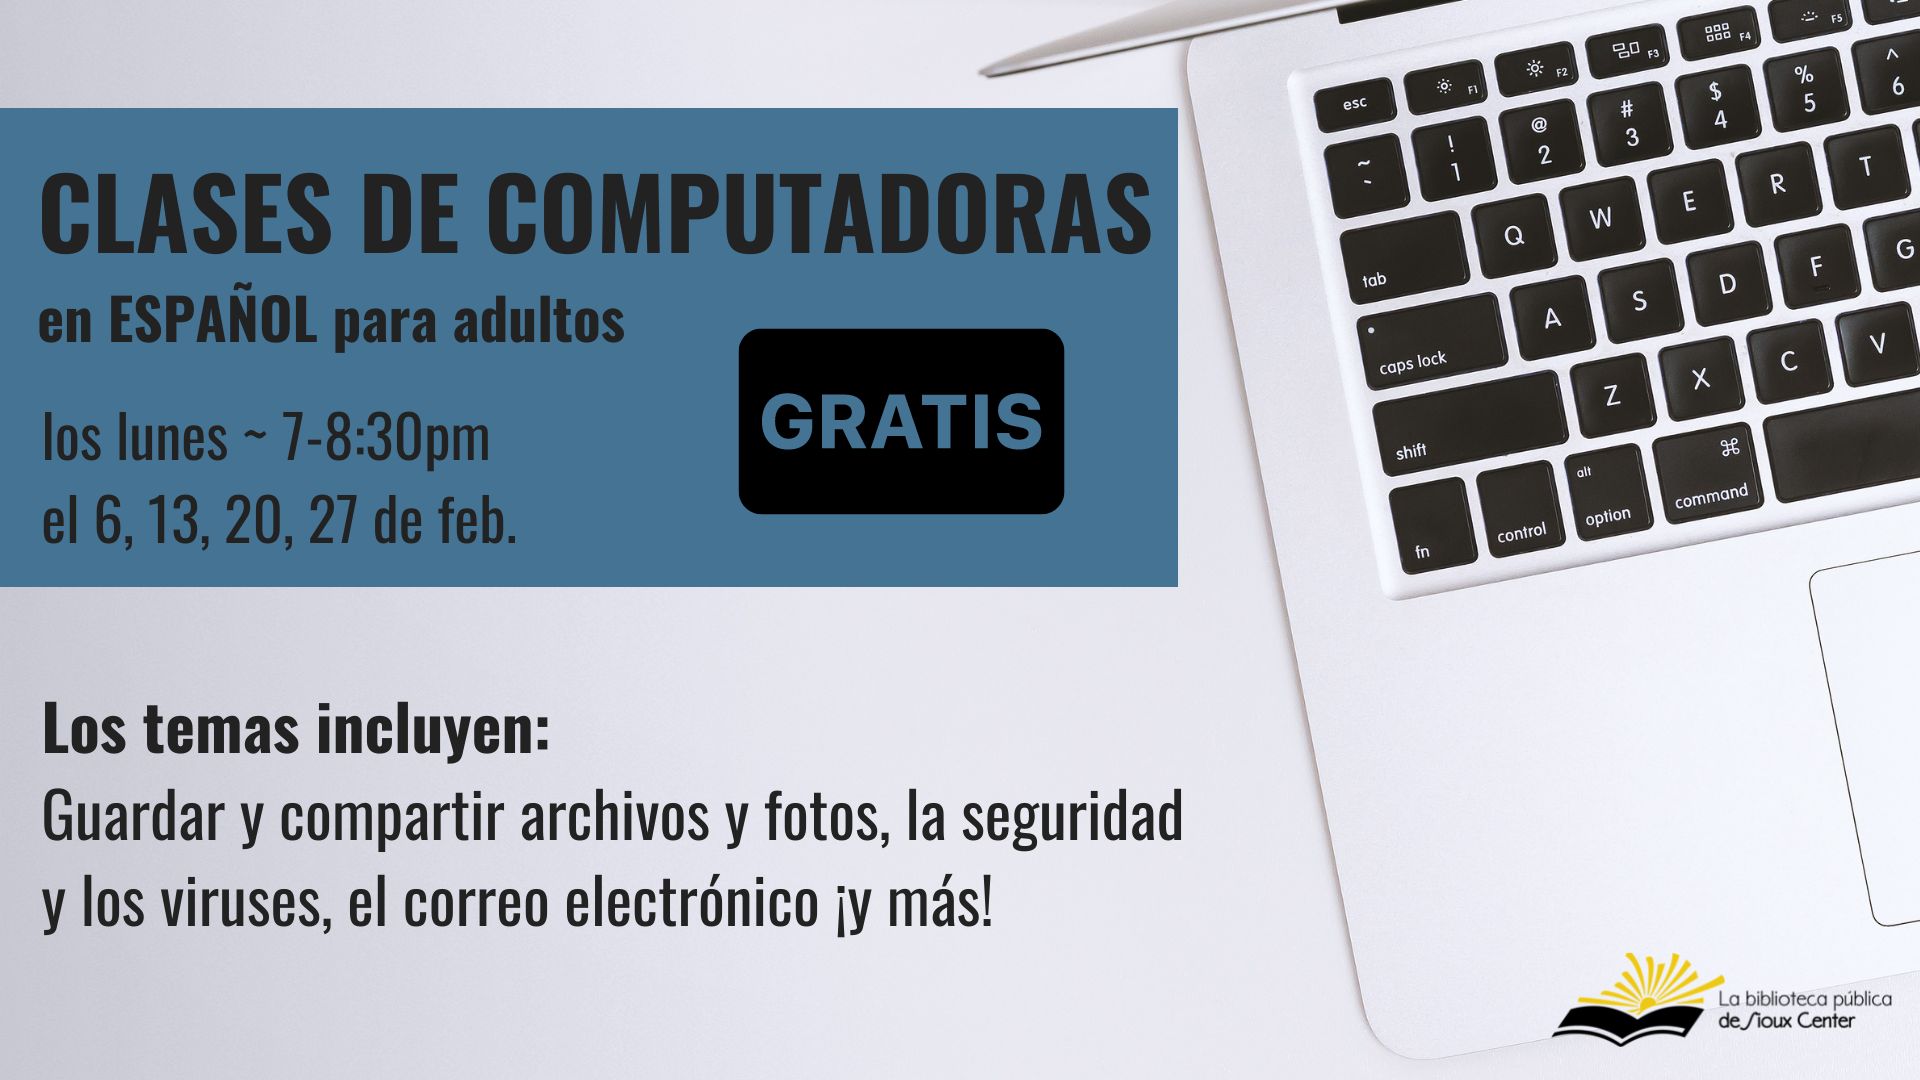 Spanish computer class flyer